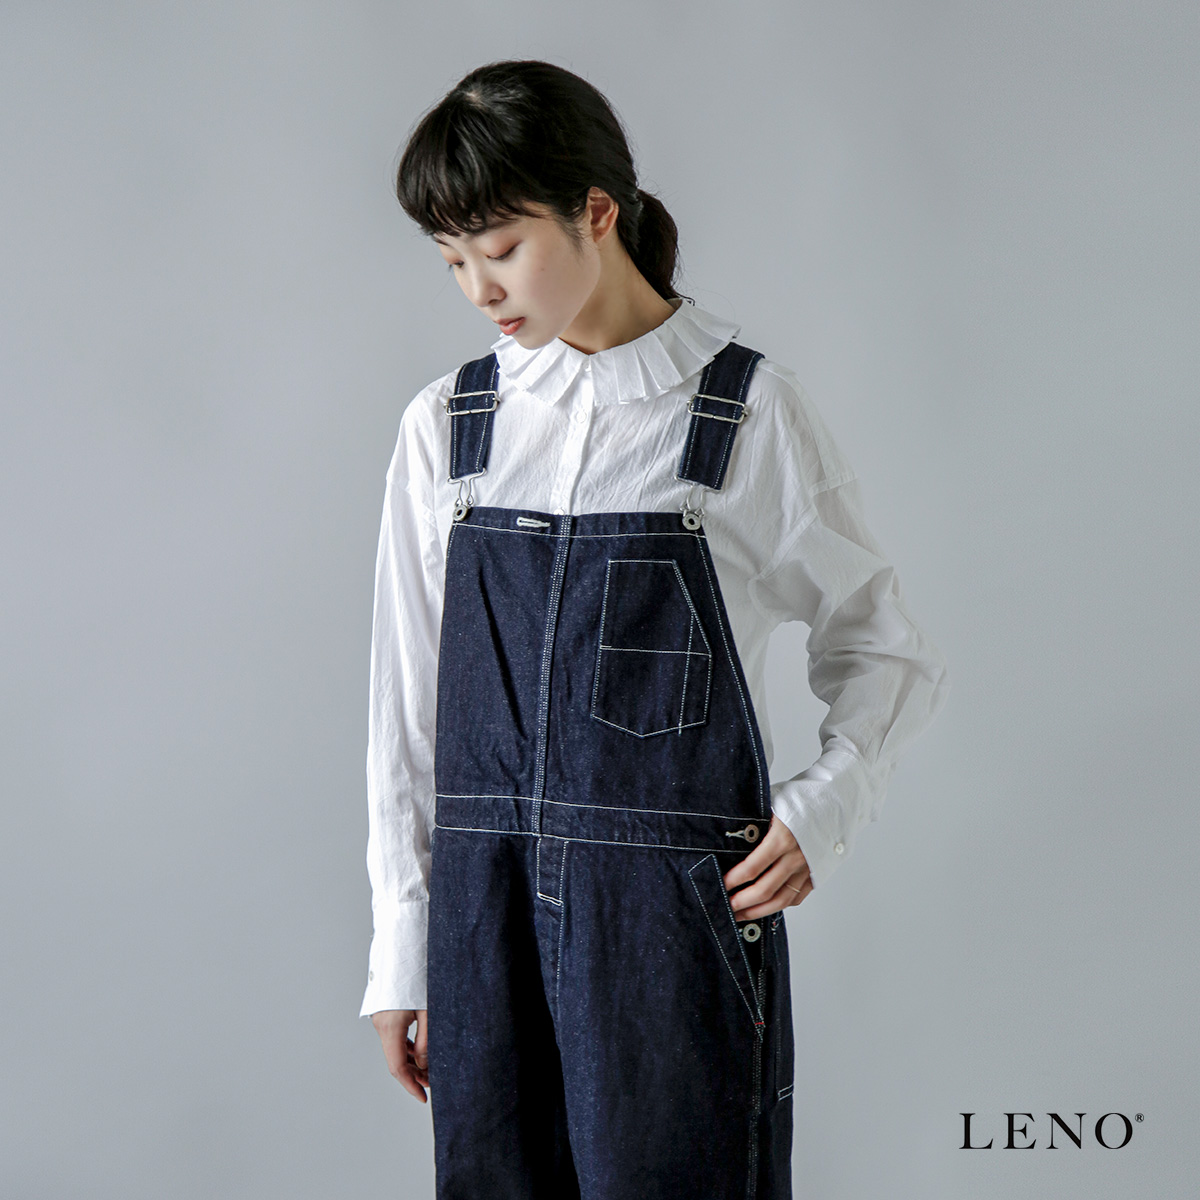 LENO(リノ)セルヴィッチデニム オーバーオール leno-pt005-008